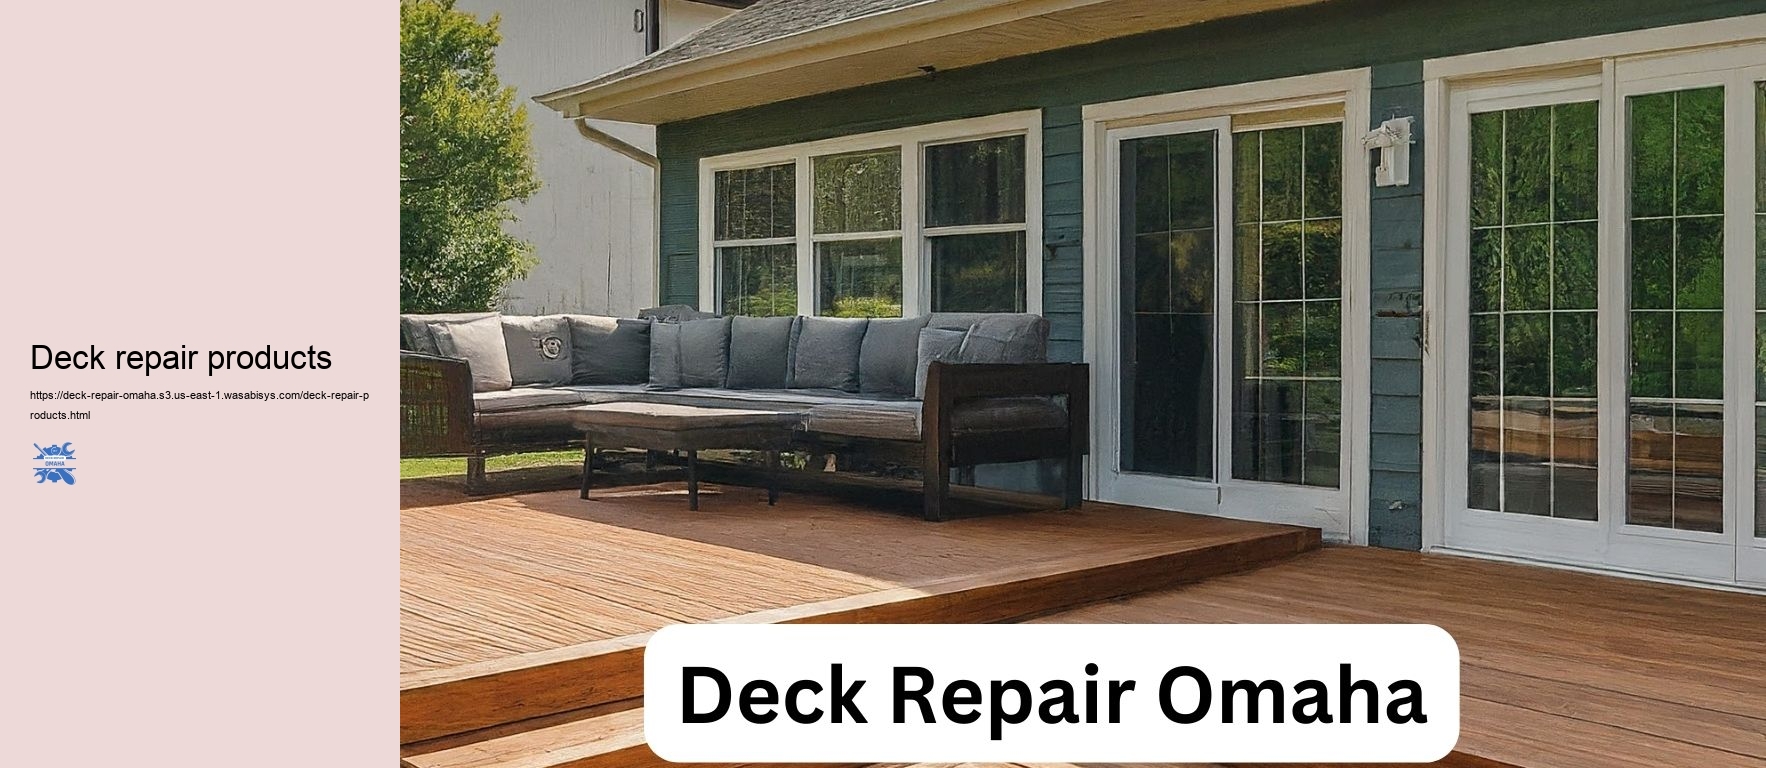 Deck repair products